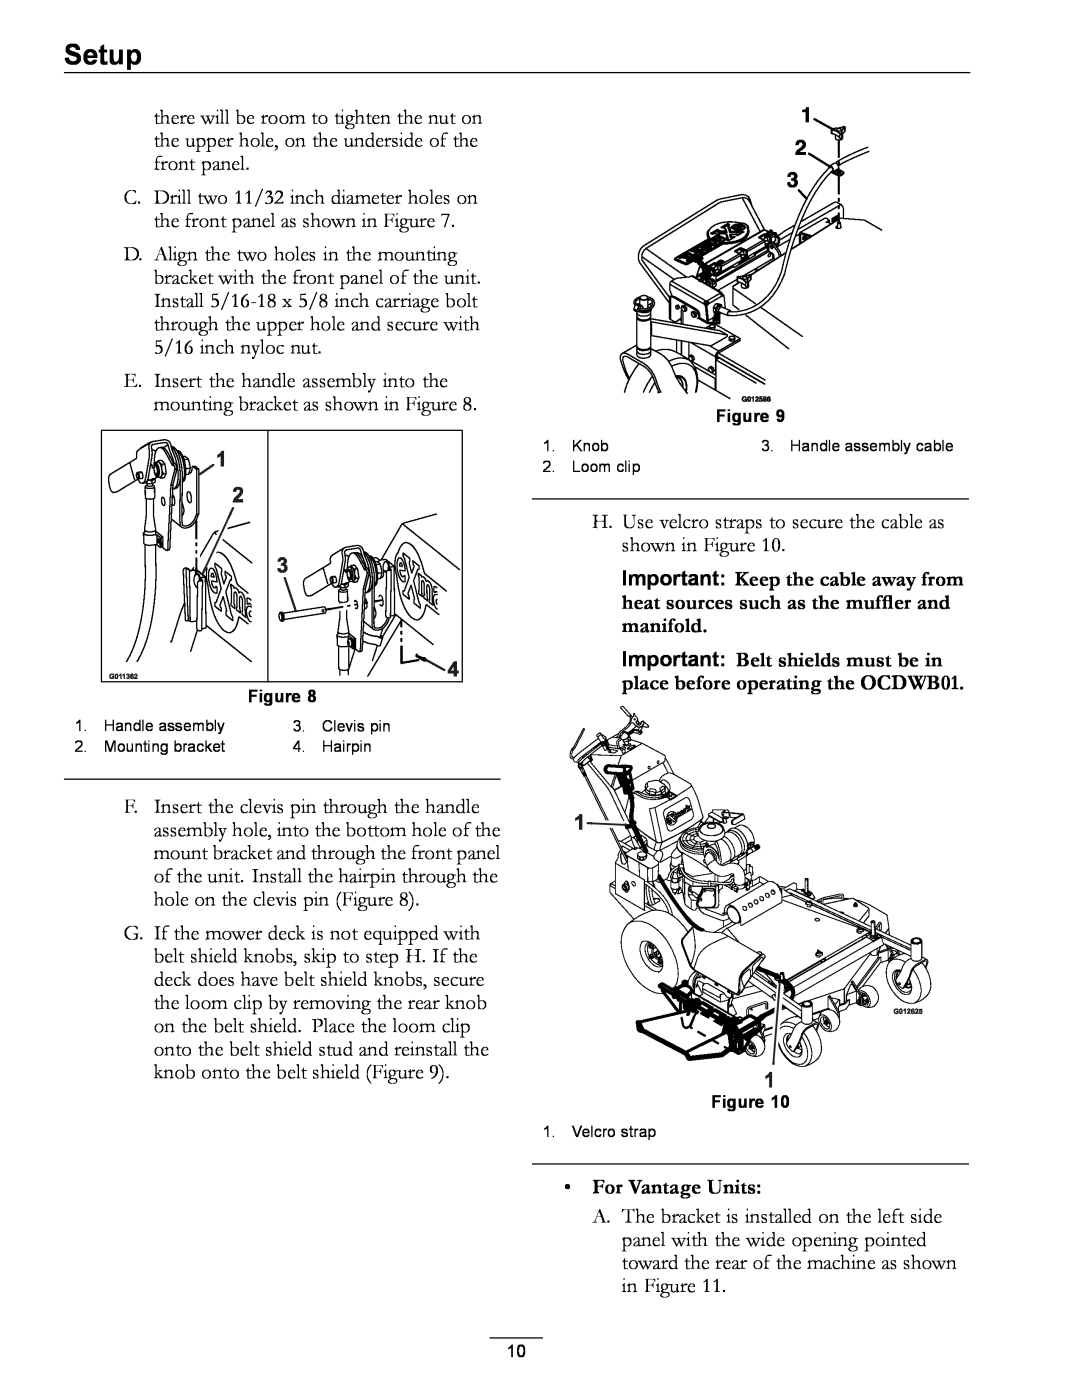 Exmark OCDWB01 manual For Vantage Units, Setup 